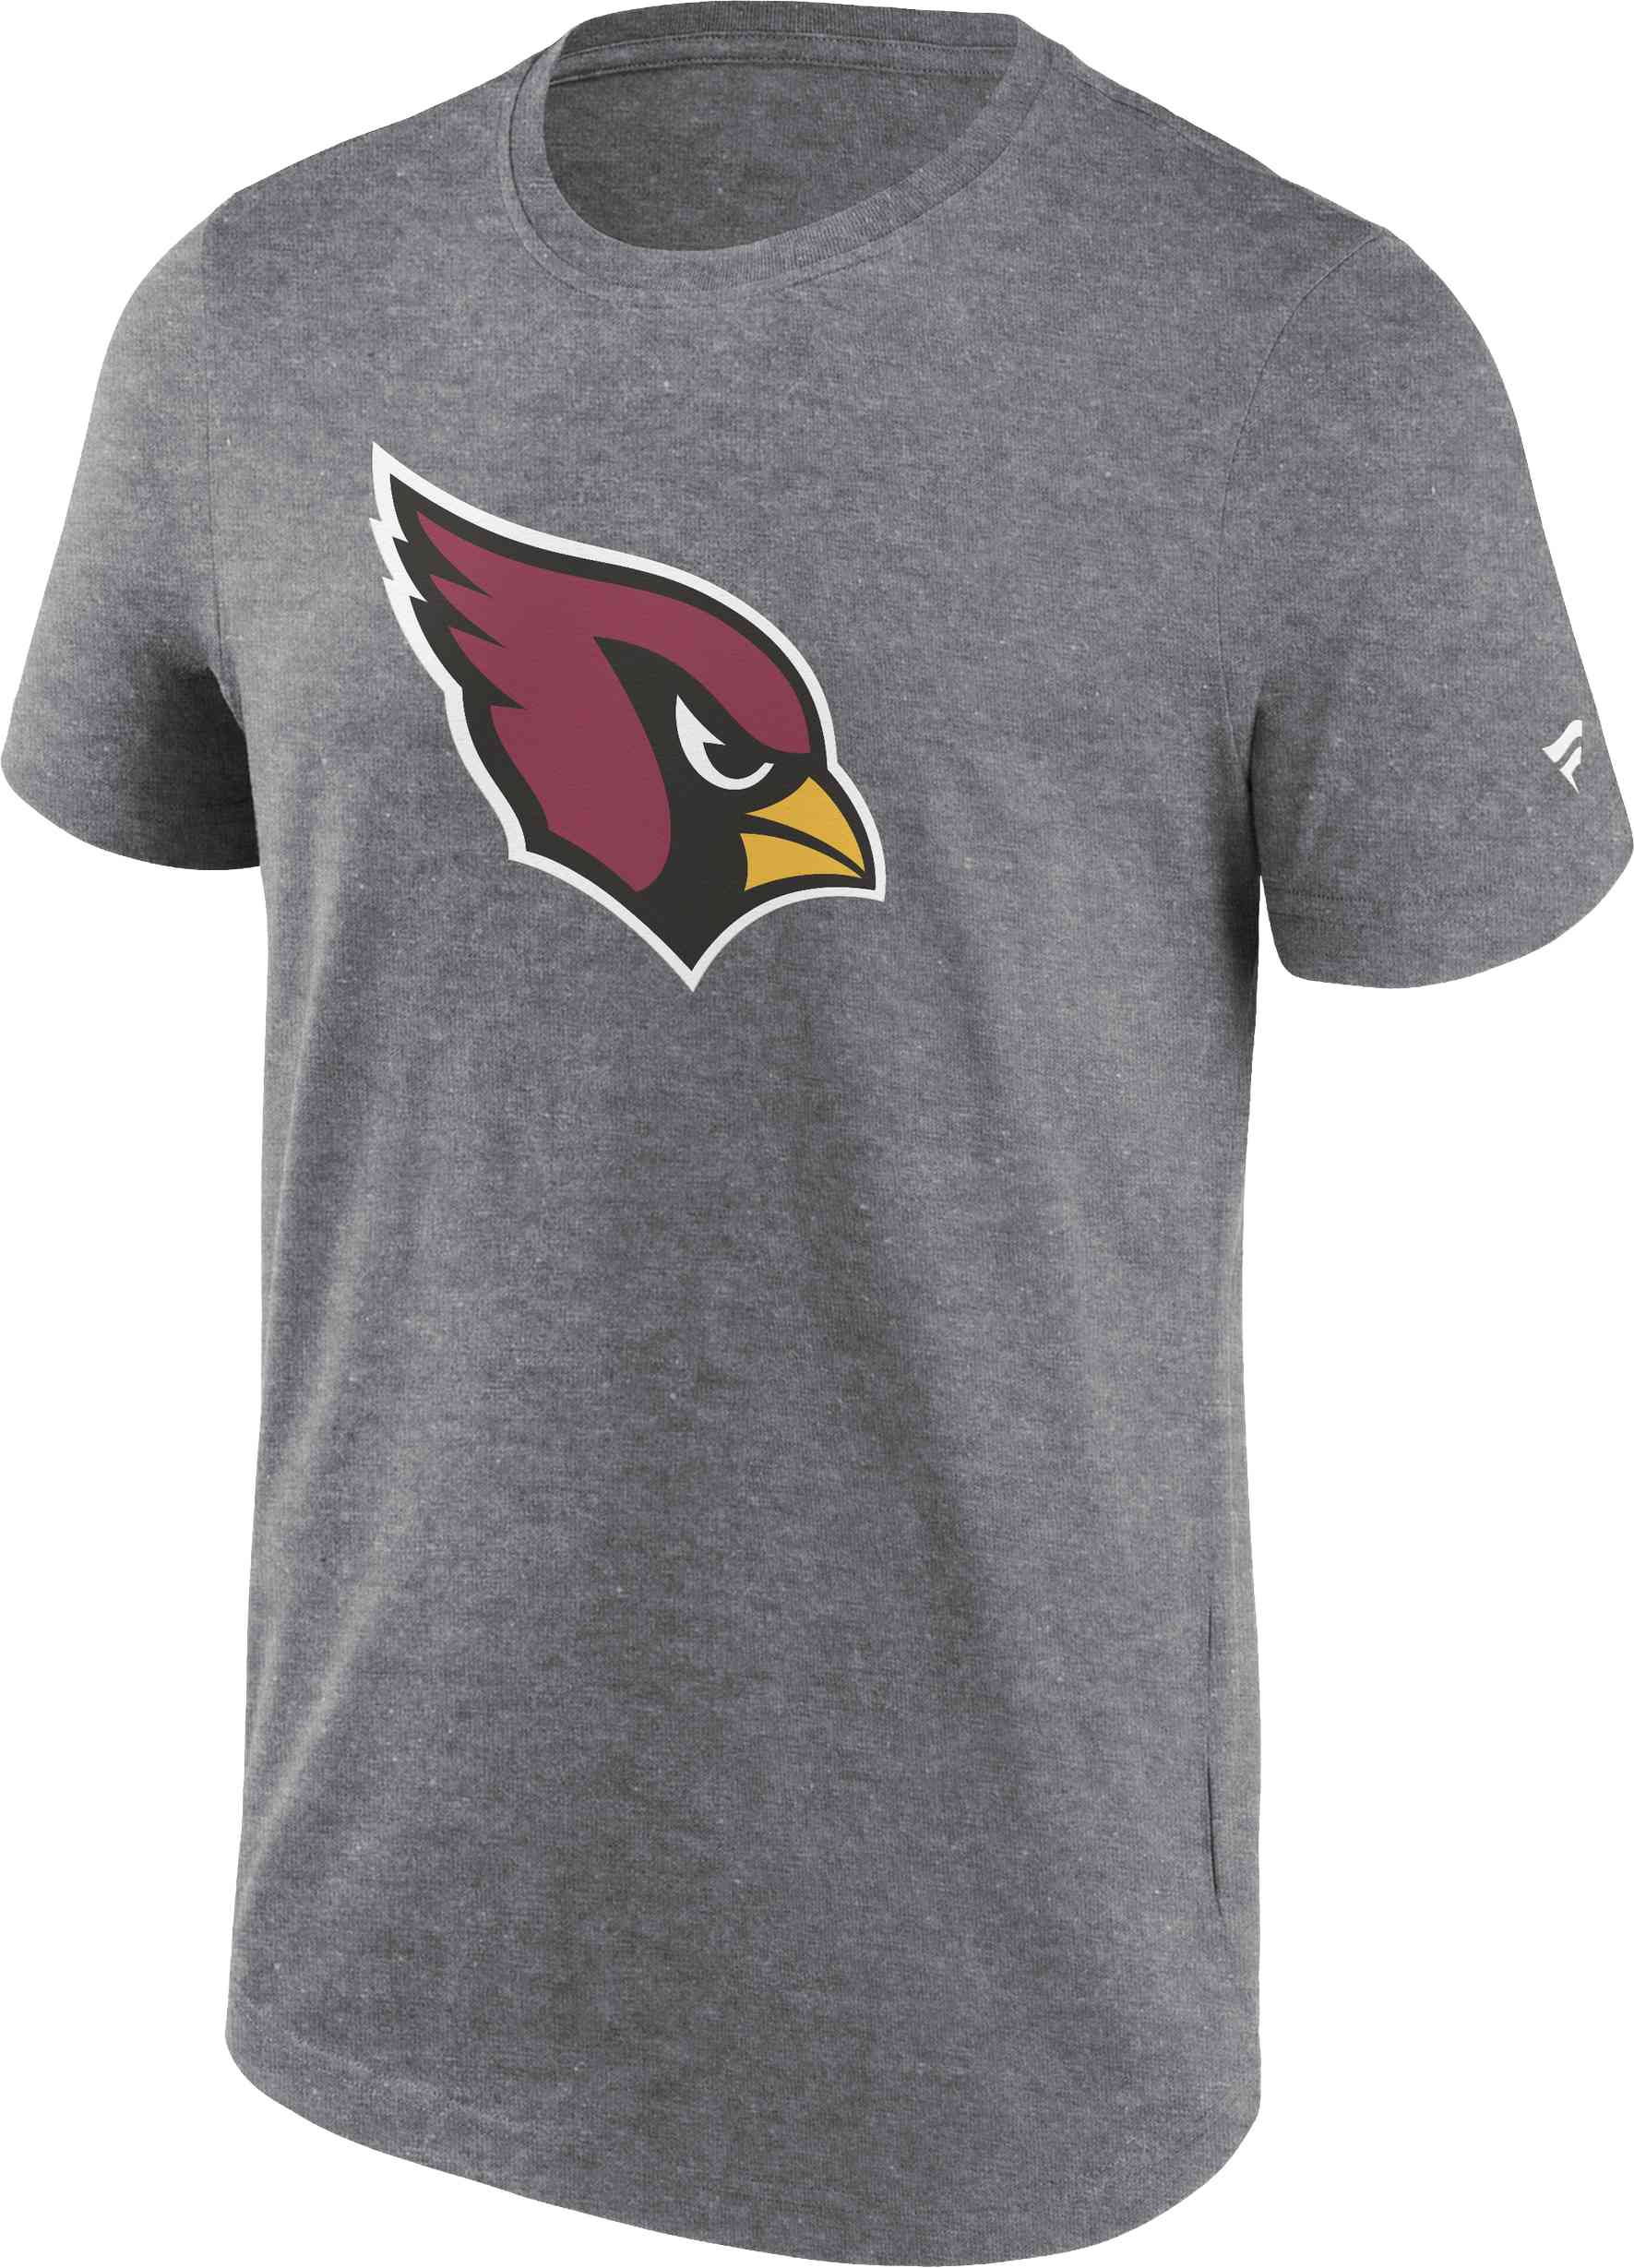 Fanatics - NFL Arizona Cardinals Primary Logo Graphic T-Shirt